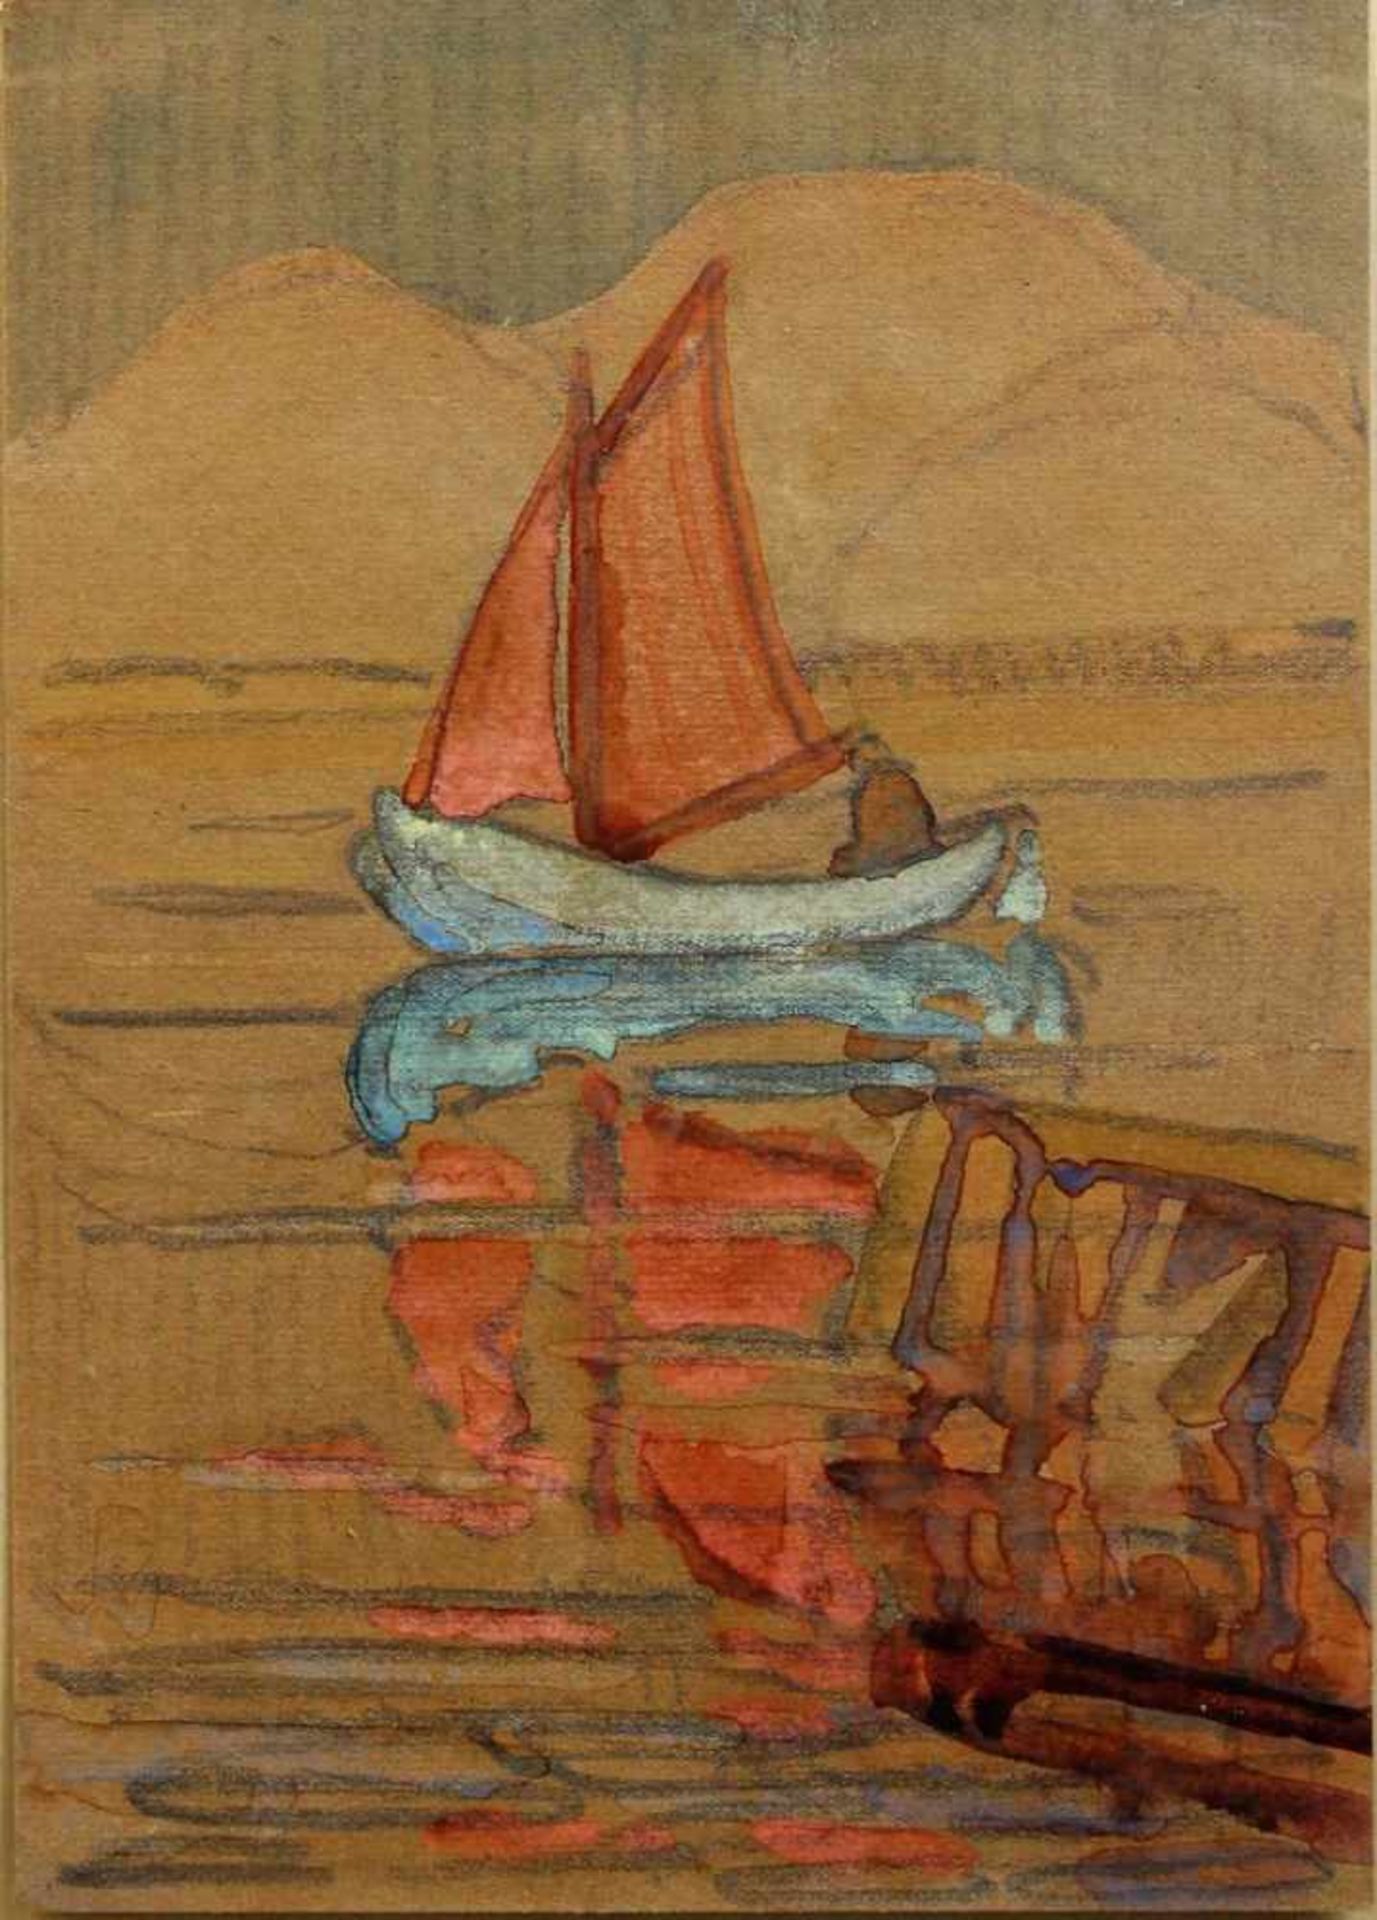 Monogrammist B.W. um 1910 " Segelboot auf dem See "Aquarell auf Papier, ca. 24,5 cm x 17,3 cm